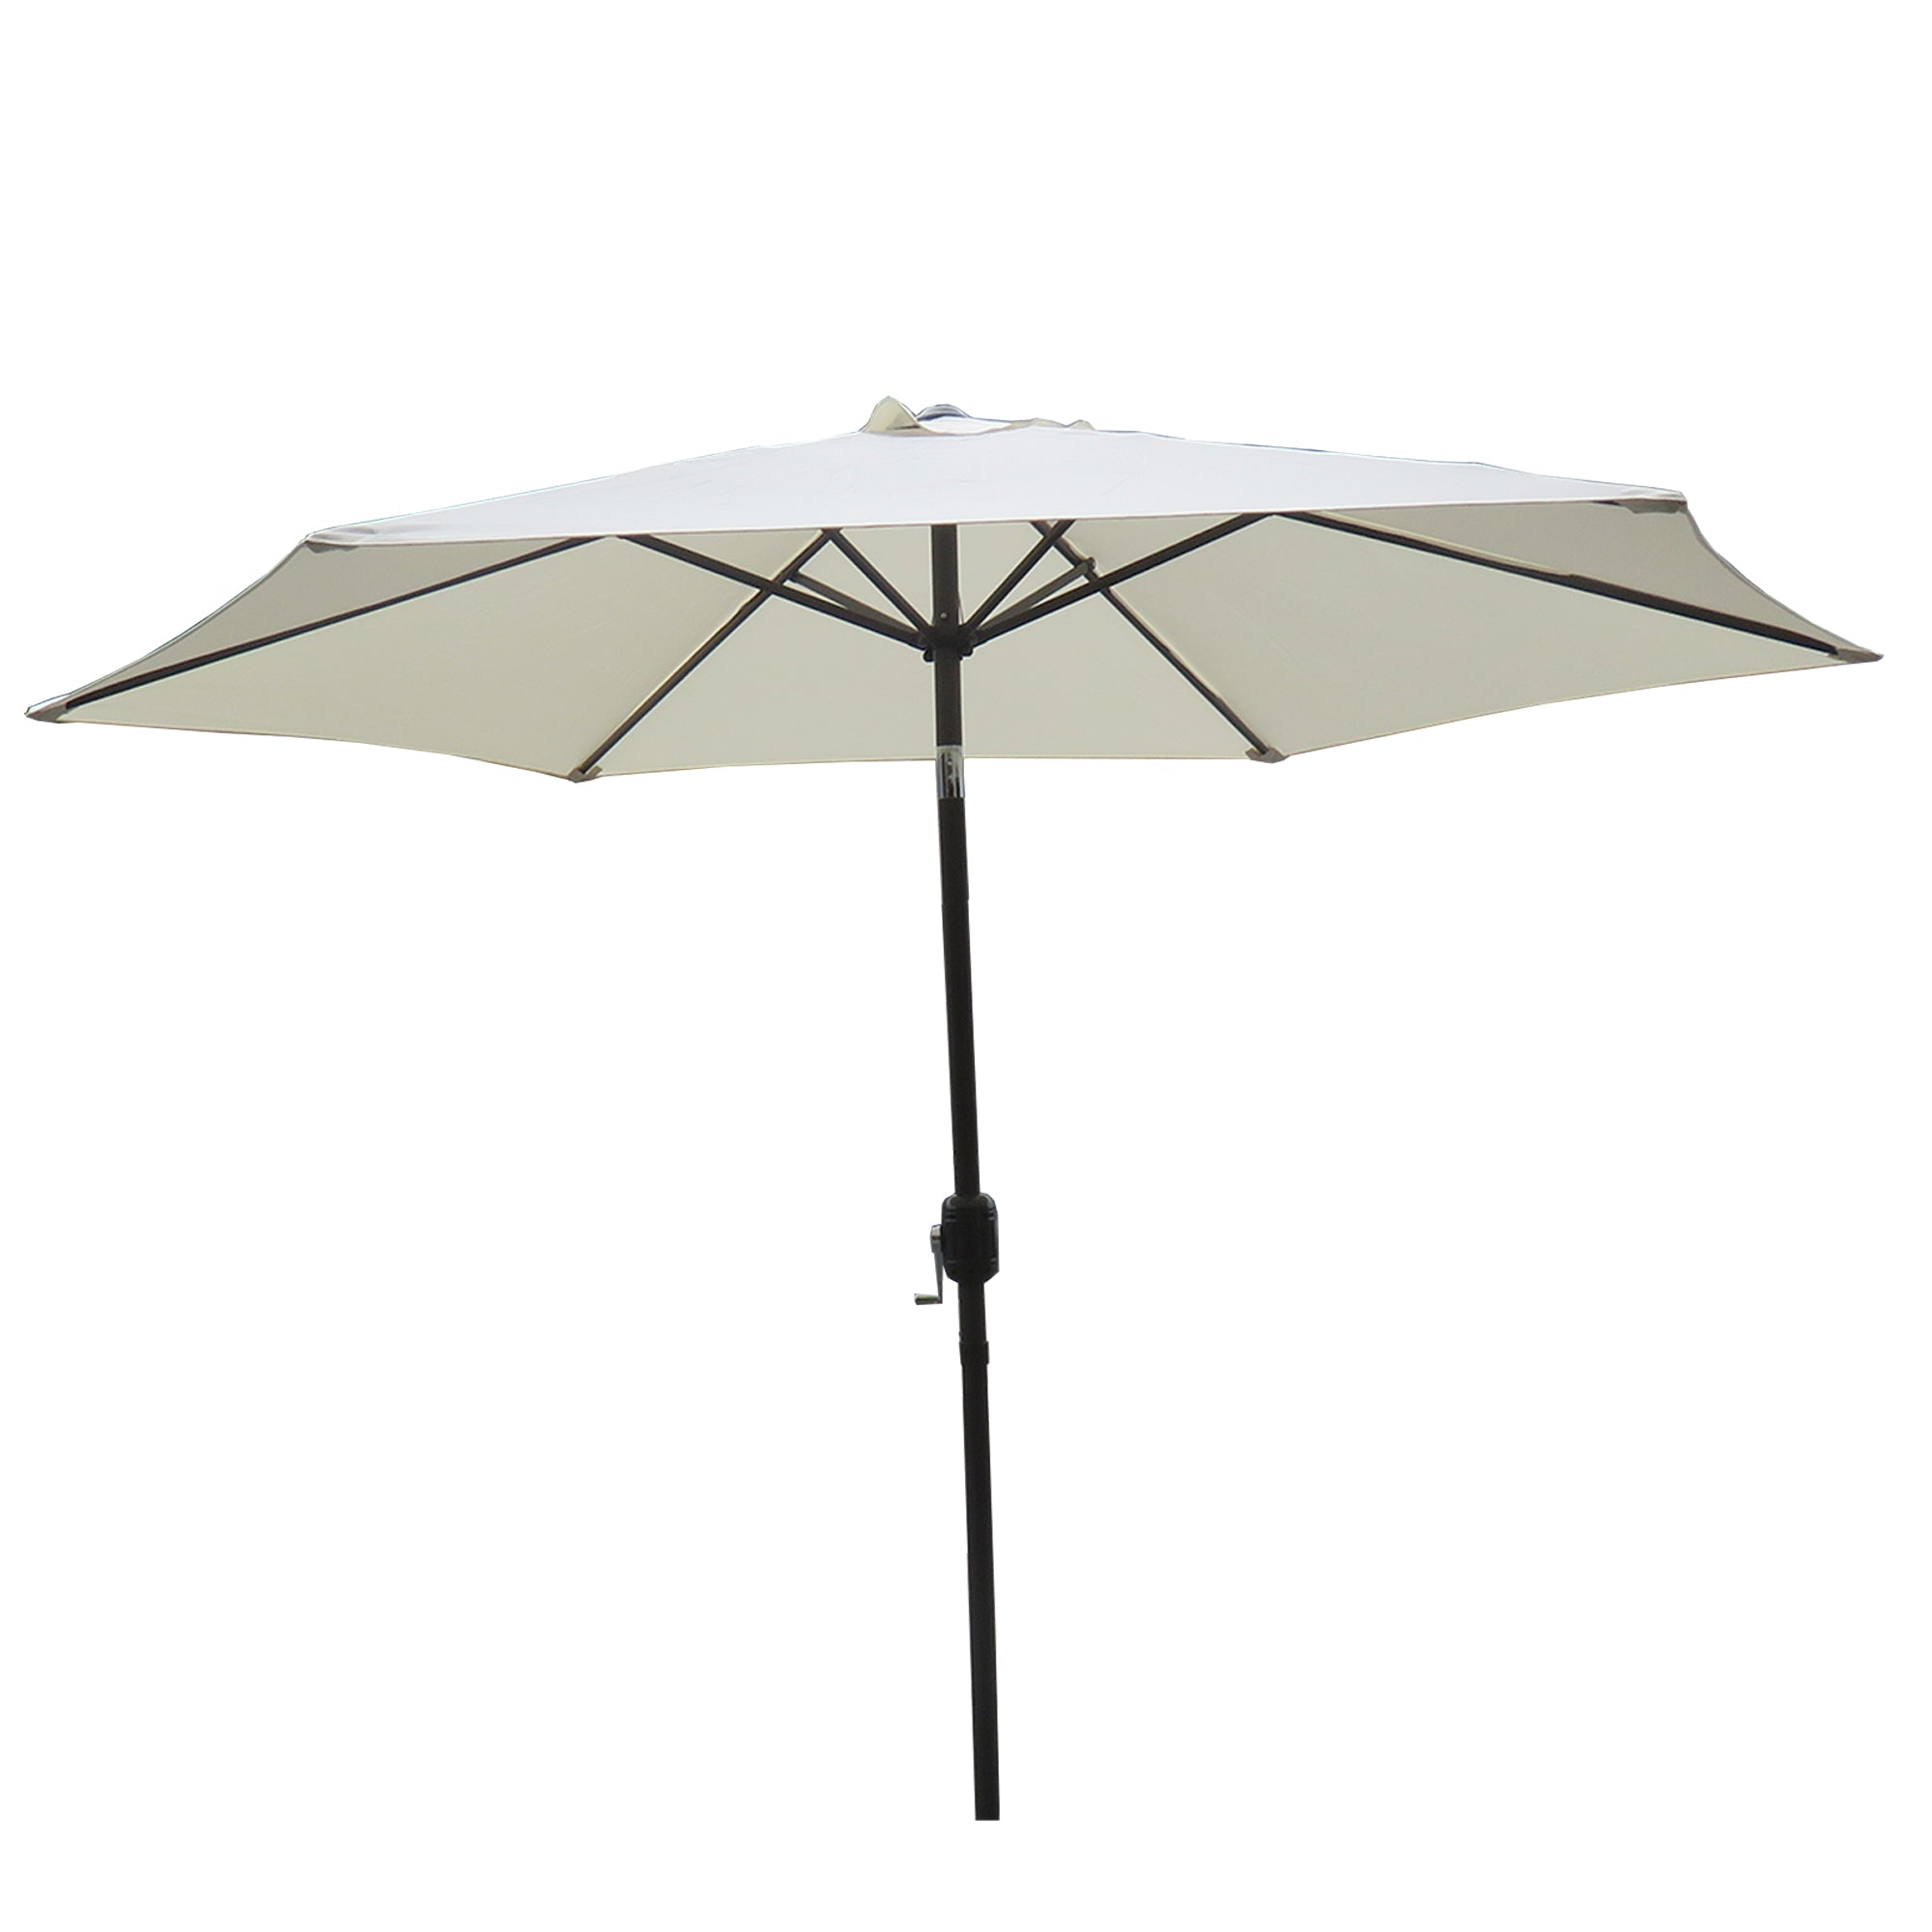 Clihome 9 Ft Outdoor Hexagonal Market Umbrella with Brown Pole